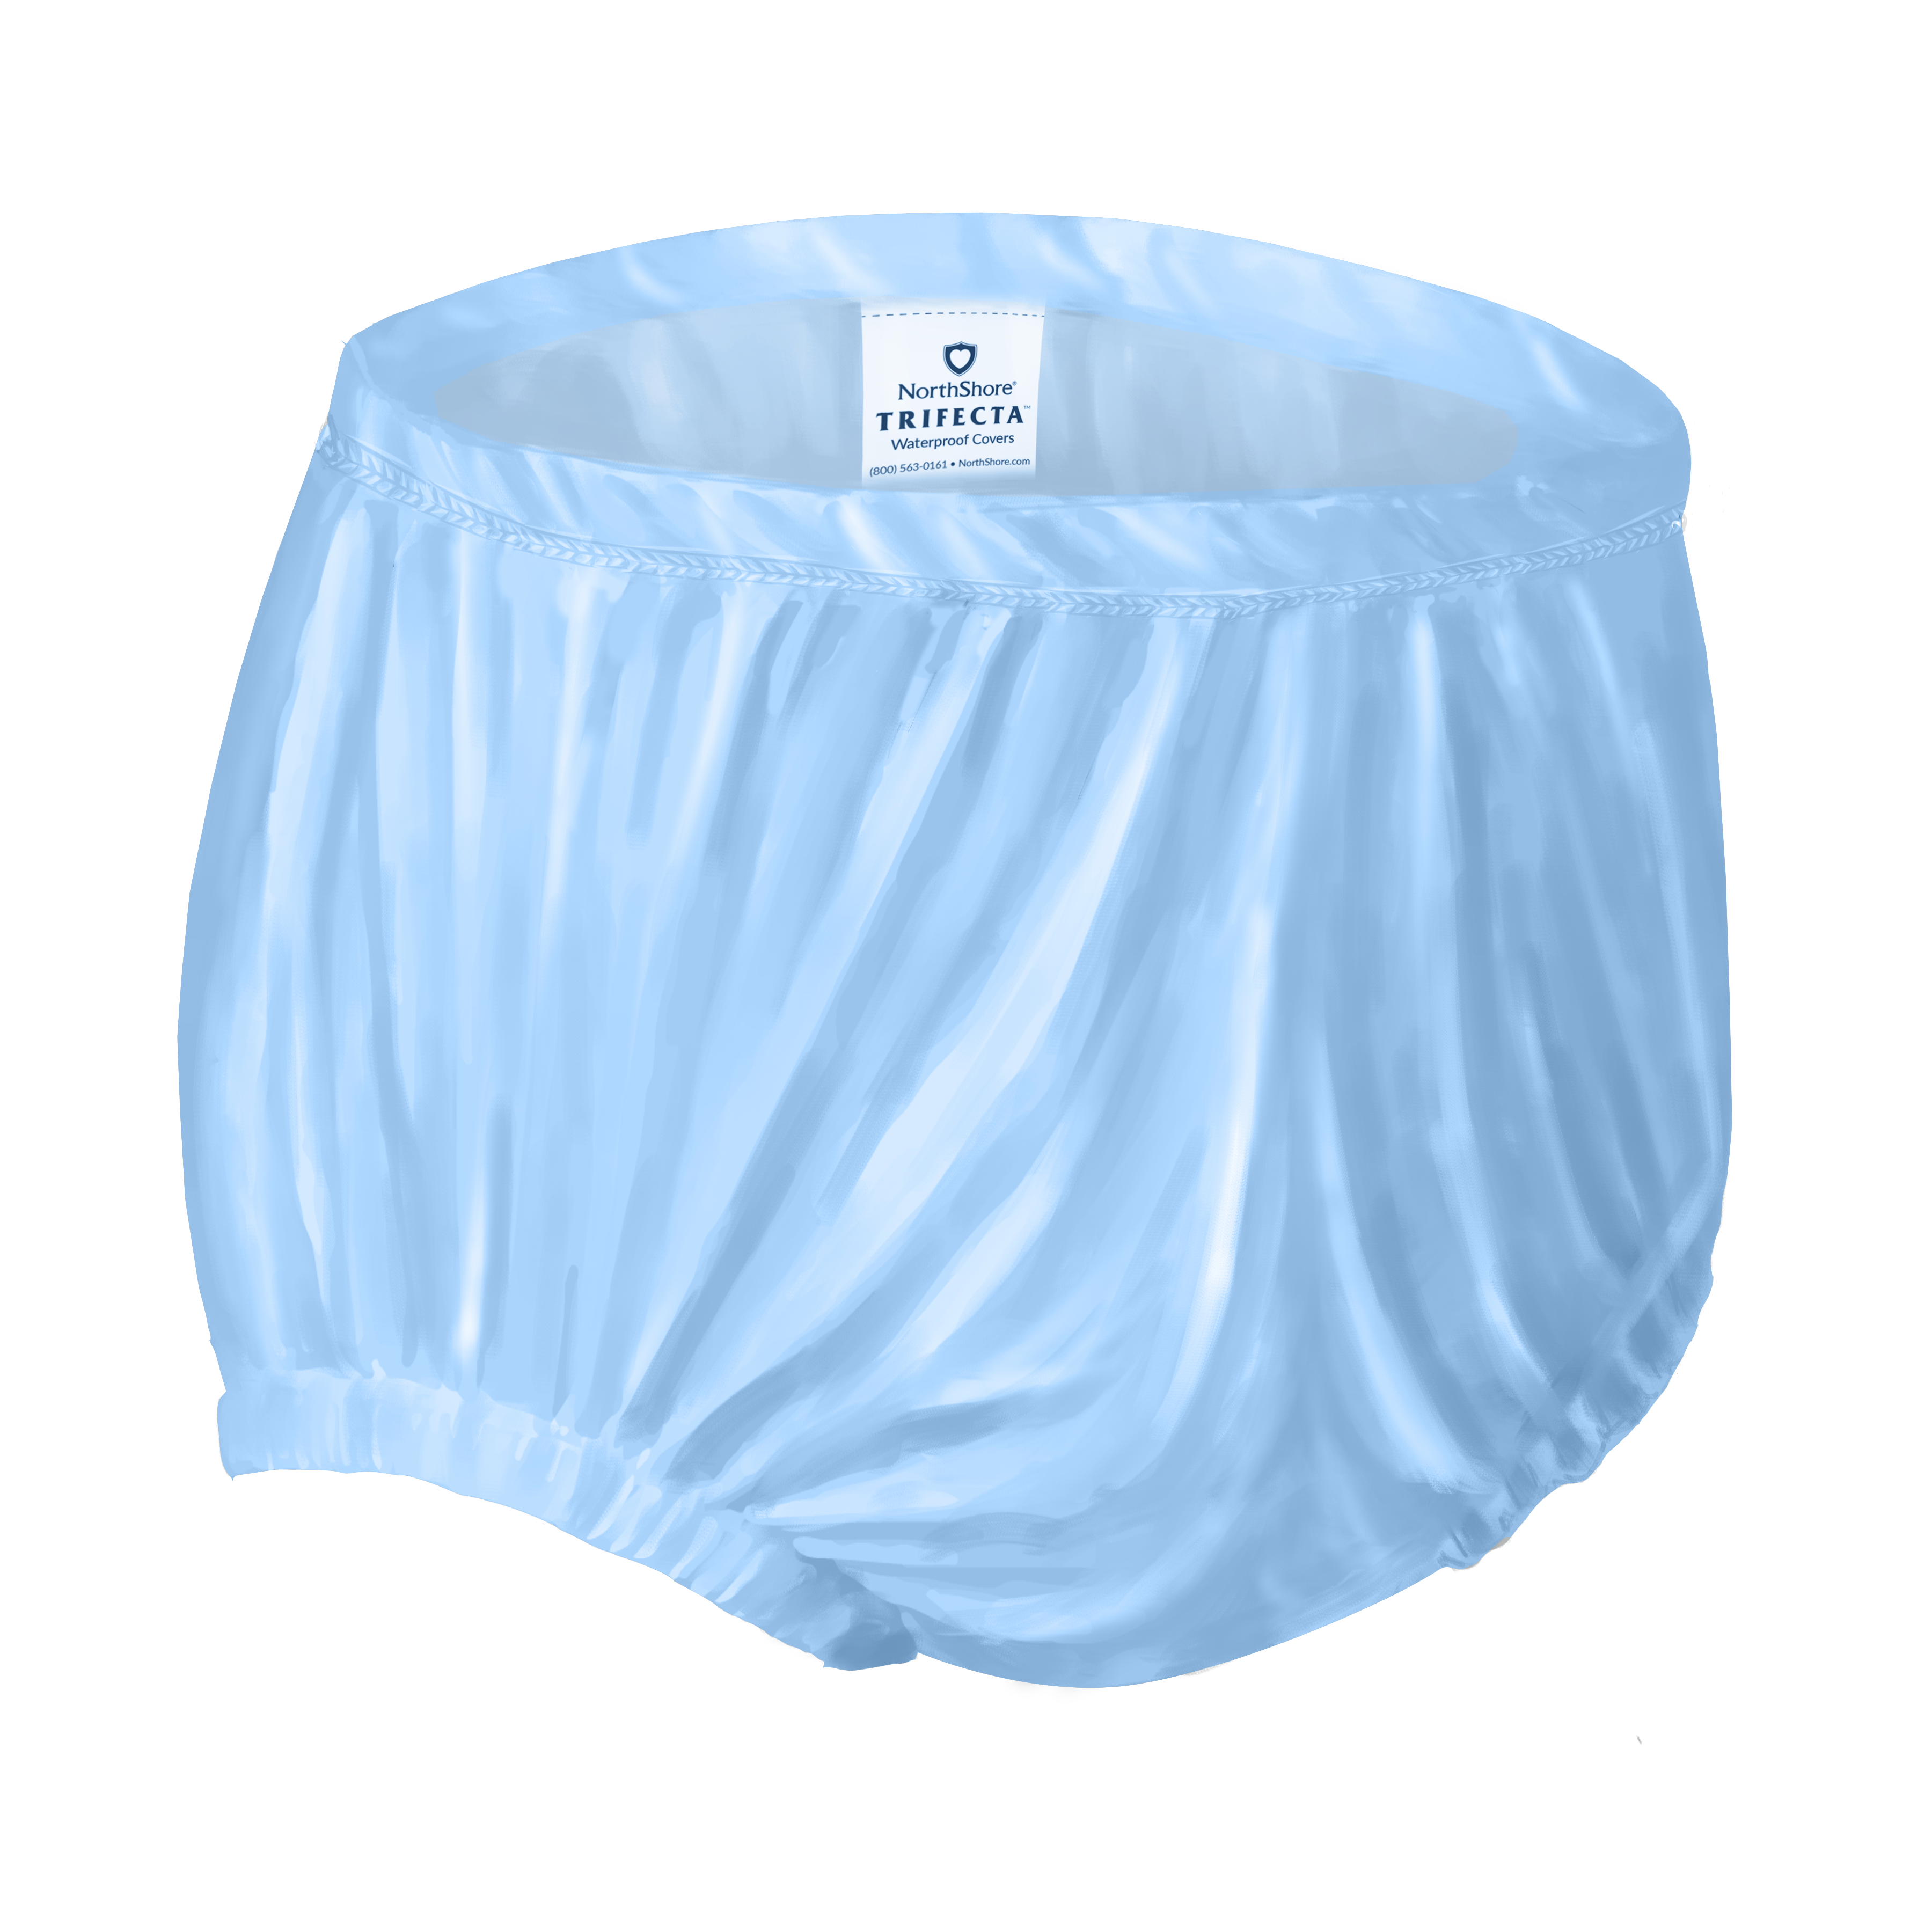 NorthShore TRIFECTA Waterproof Diaper Covers – Healthwick